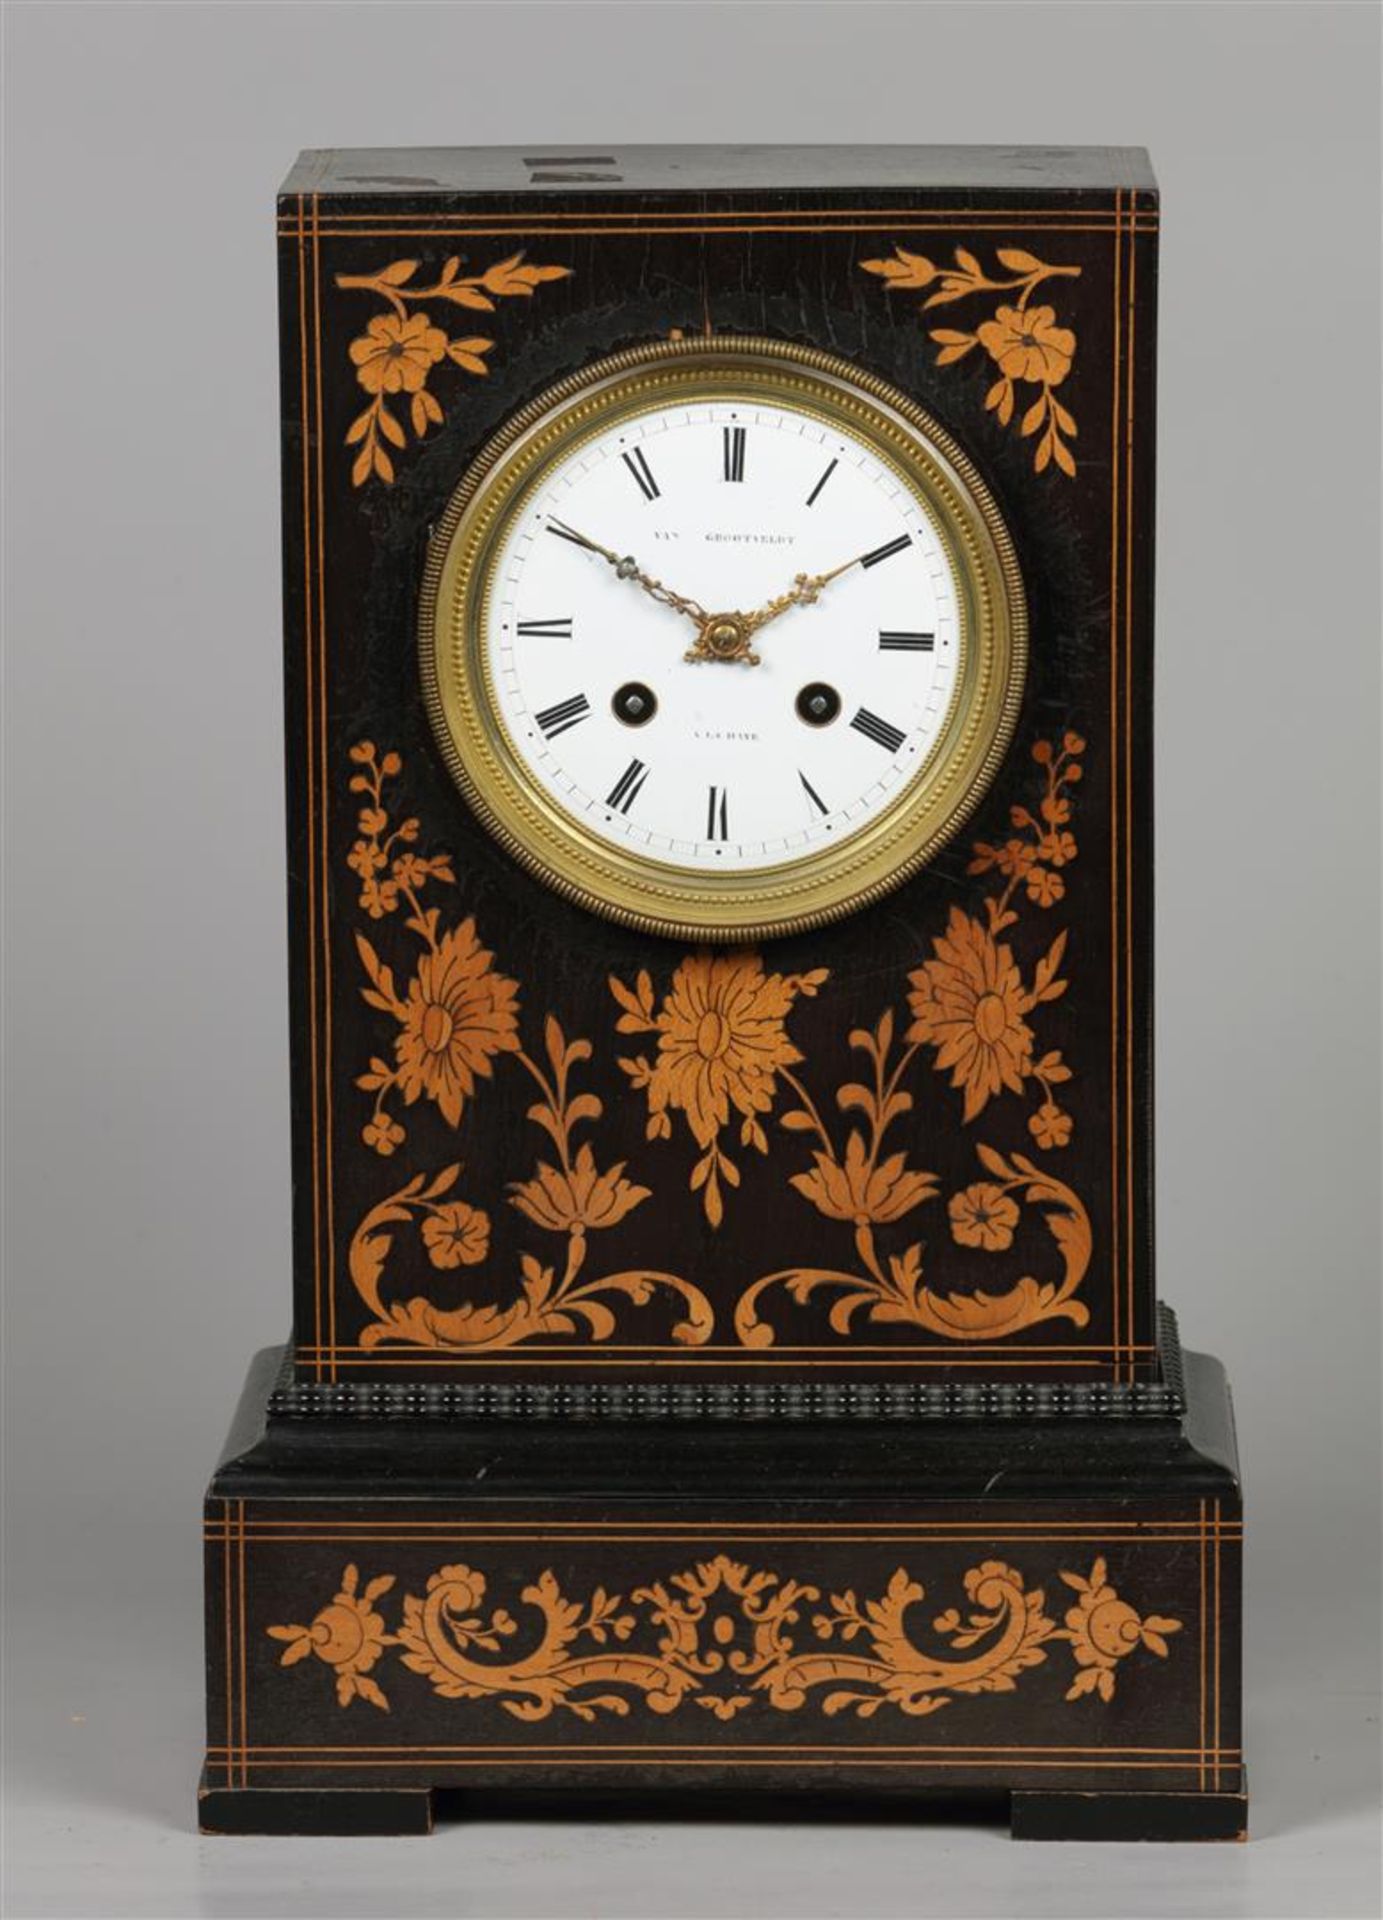 A mahogany veneered mantel clock with fruit wood inlay, ena